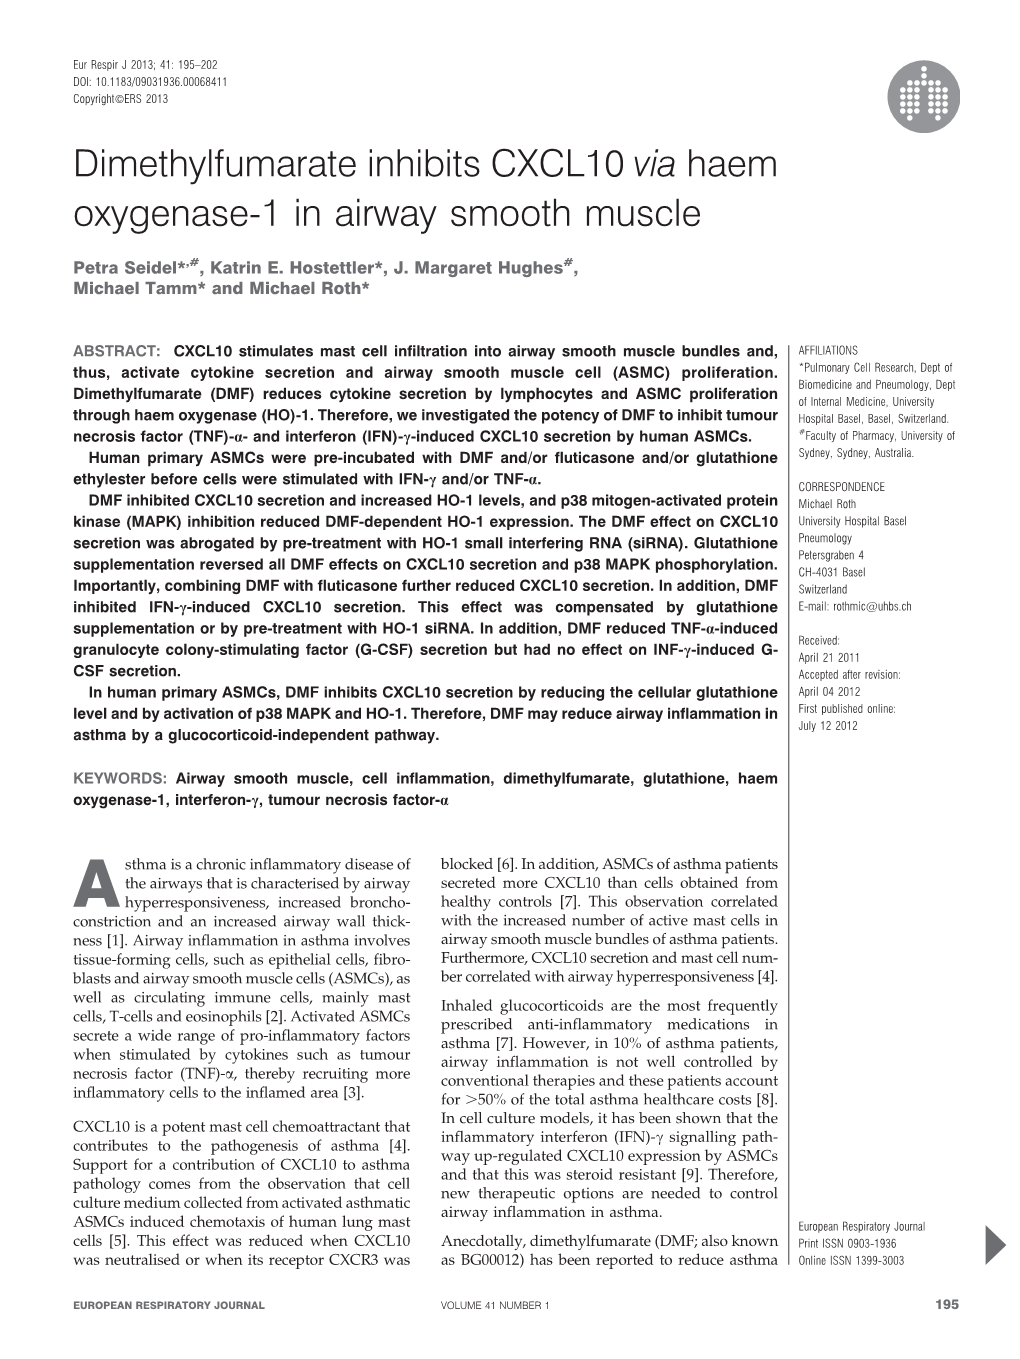 Dimethylfumarate Inhibits CXCL10 Via Haem Oxygenase-1 in Airway Smooth Muscle